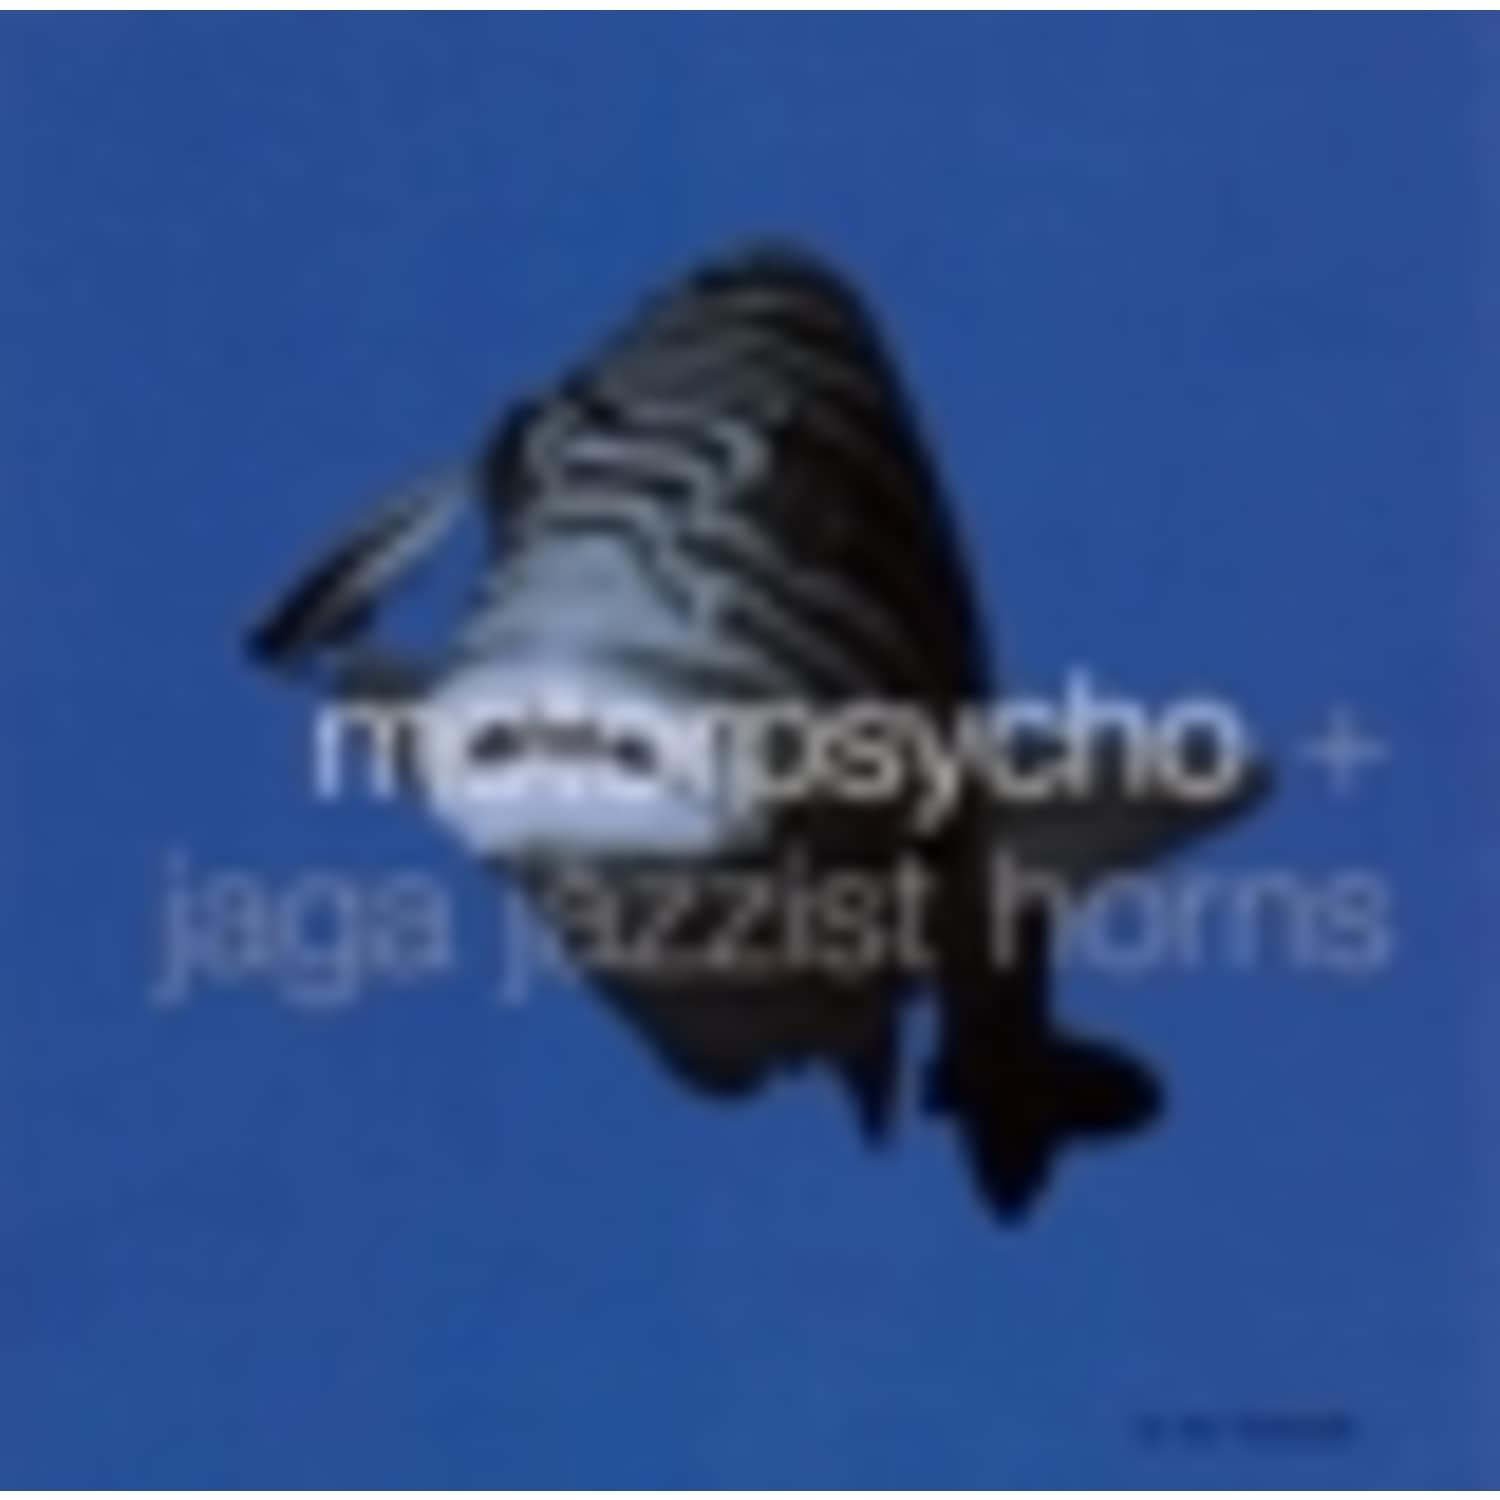 Motorpsycho+Jaga Jazzist Horns - IN THE FISHTANK 10 